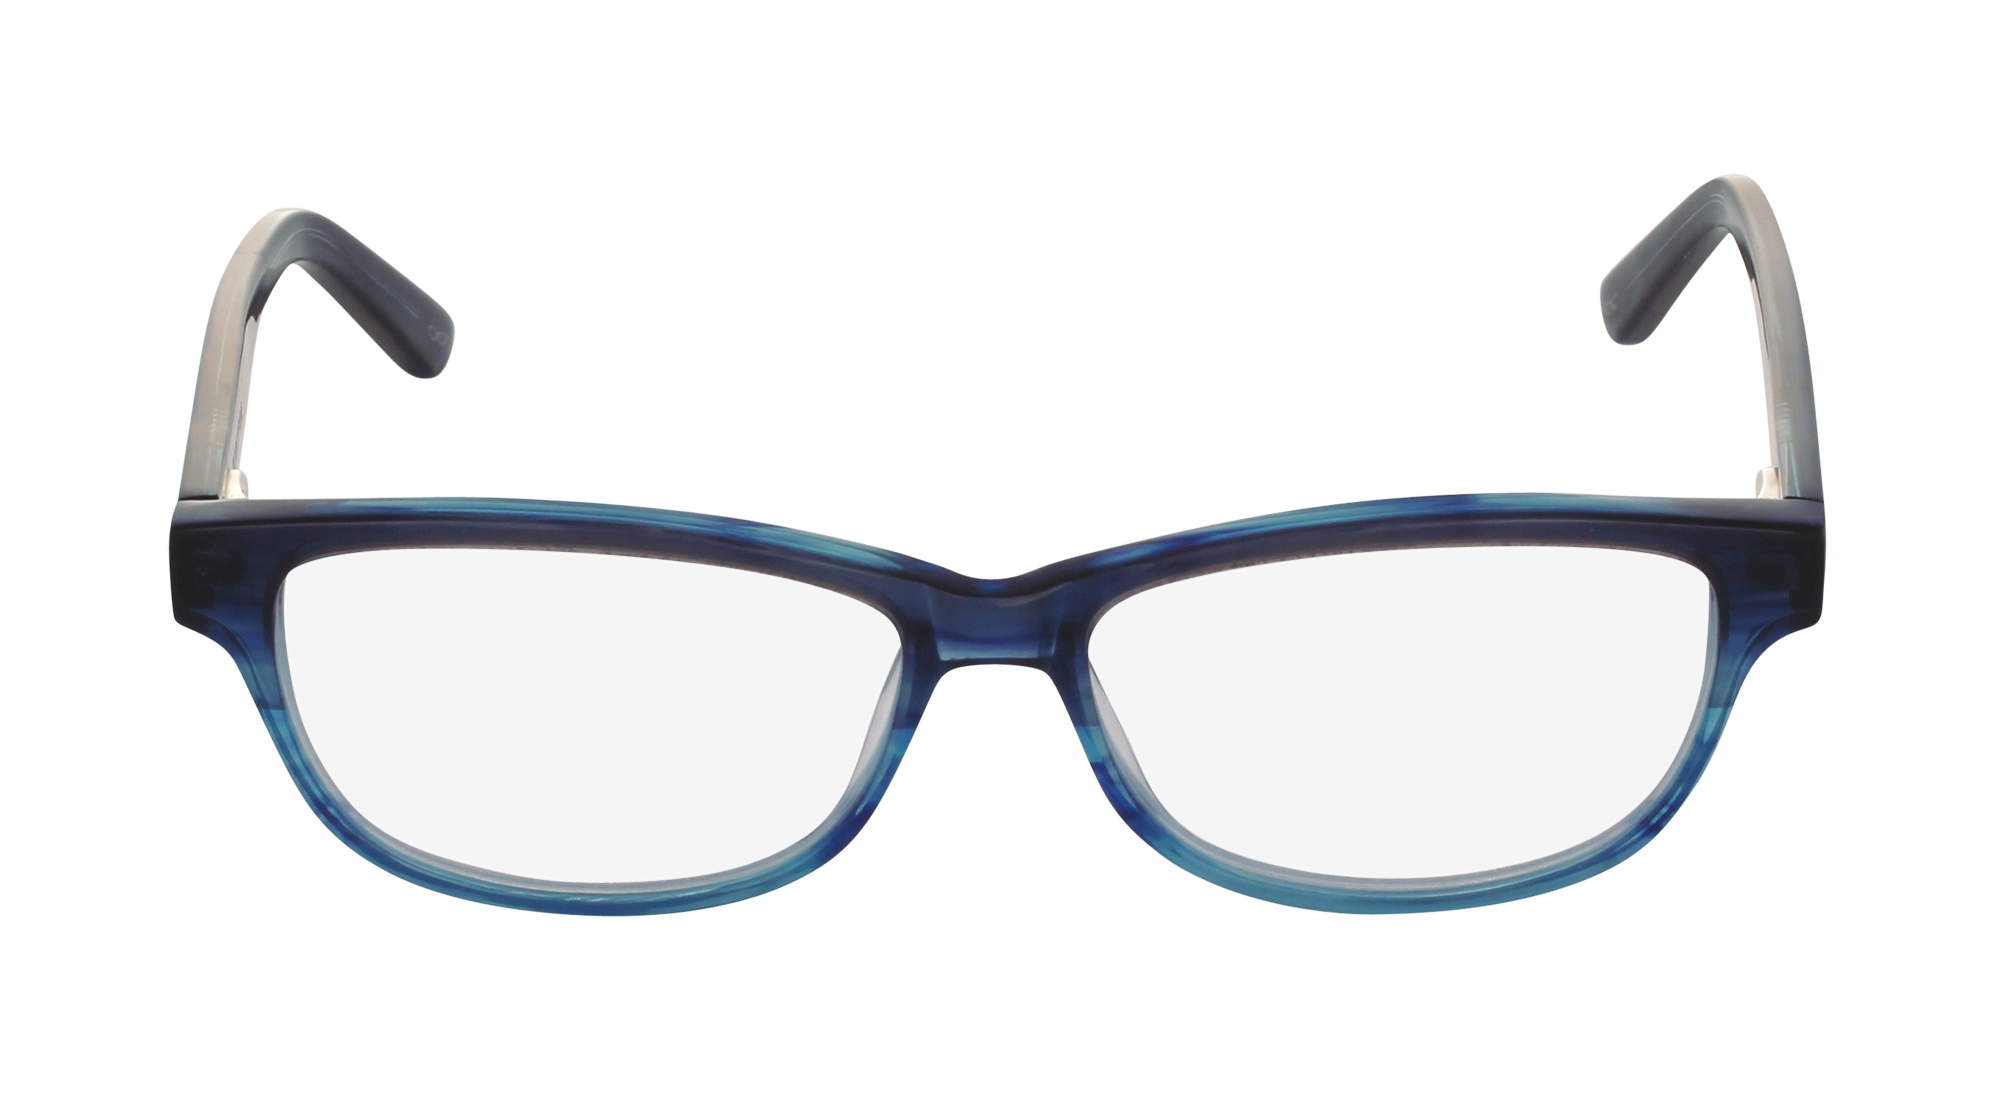 Sunglasses Frames Png Hd - Glasses, Transparent background PNG HD thumbnail